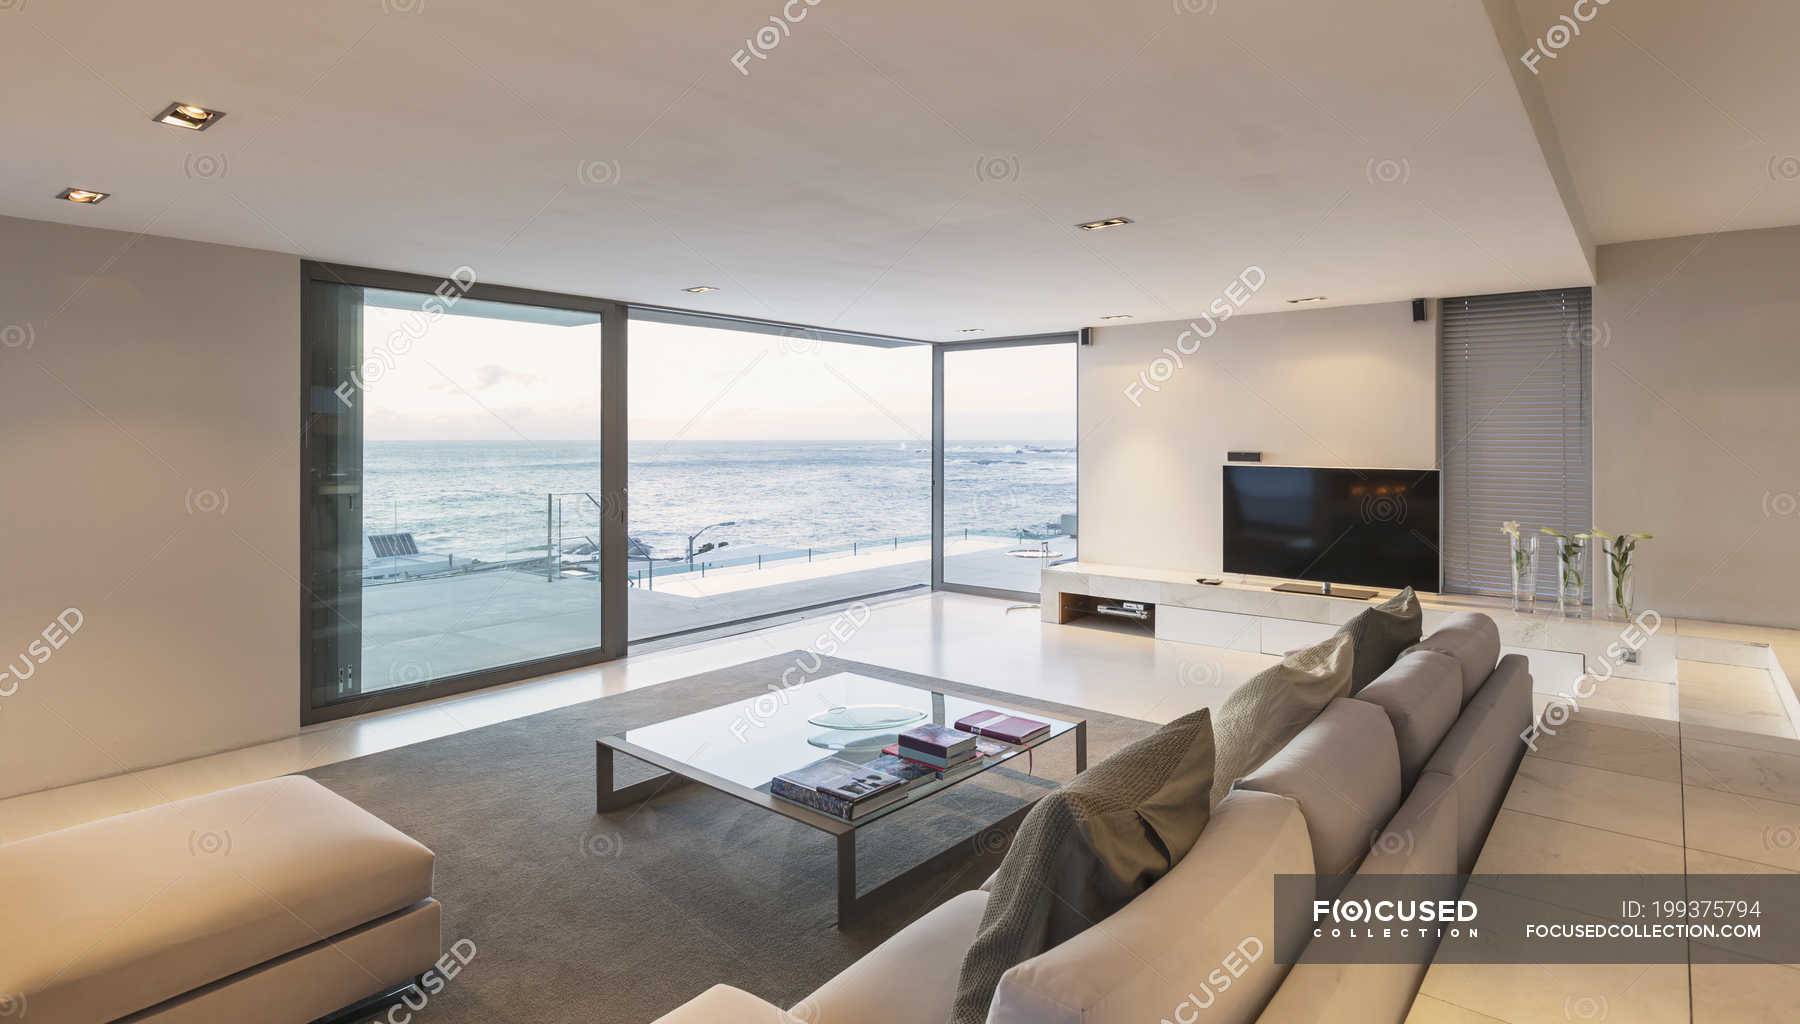 Modern Minimalist Luxury Living Room With Patio Doors Open To Ocean View Horizontal Building Stock Photo 199375794